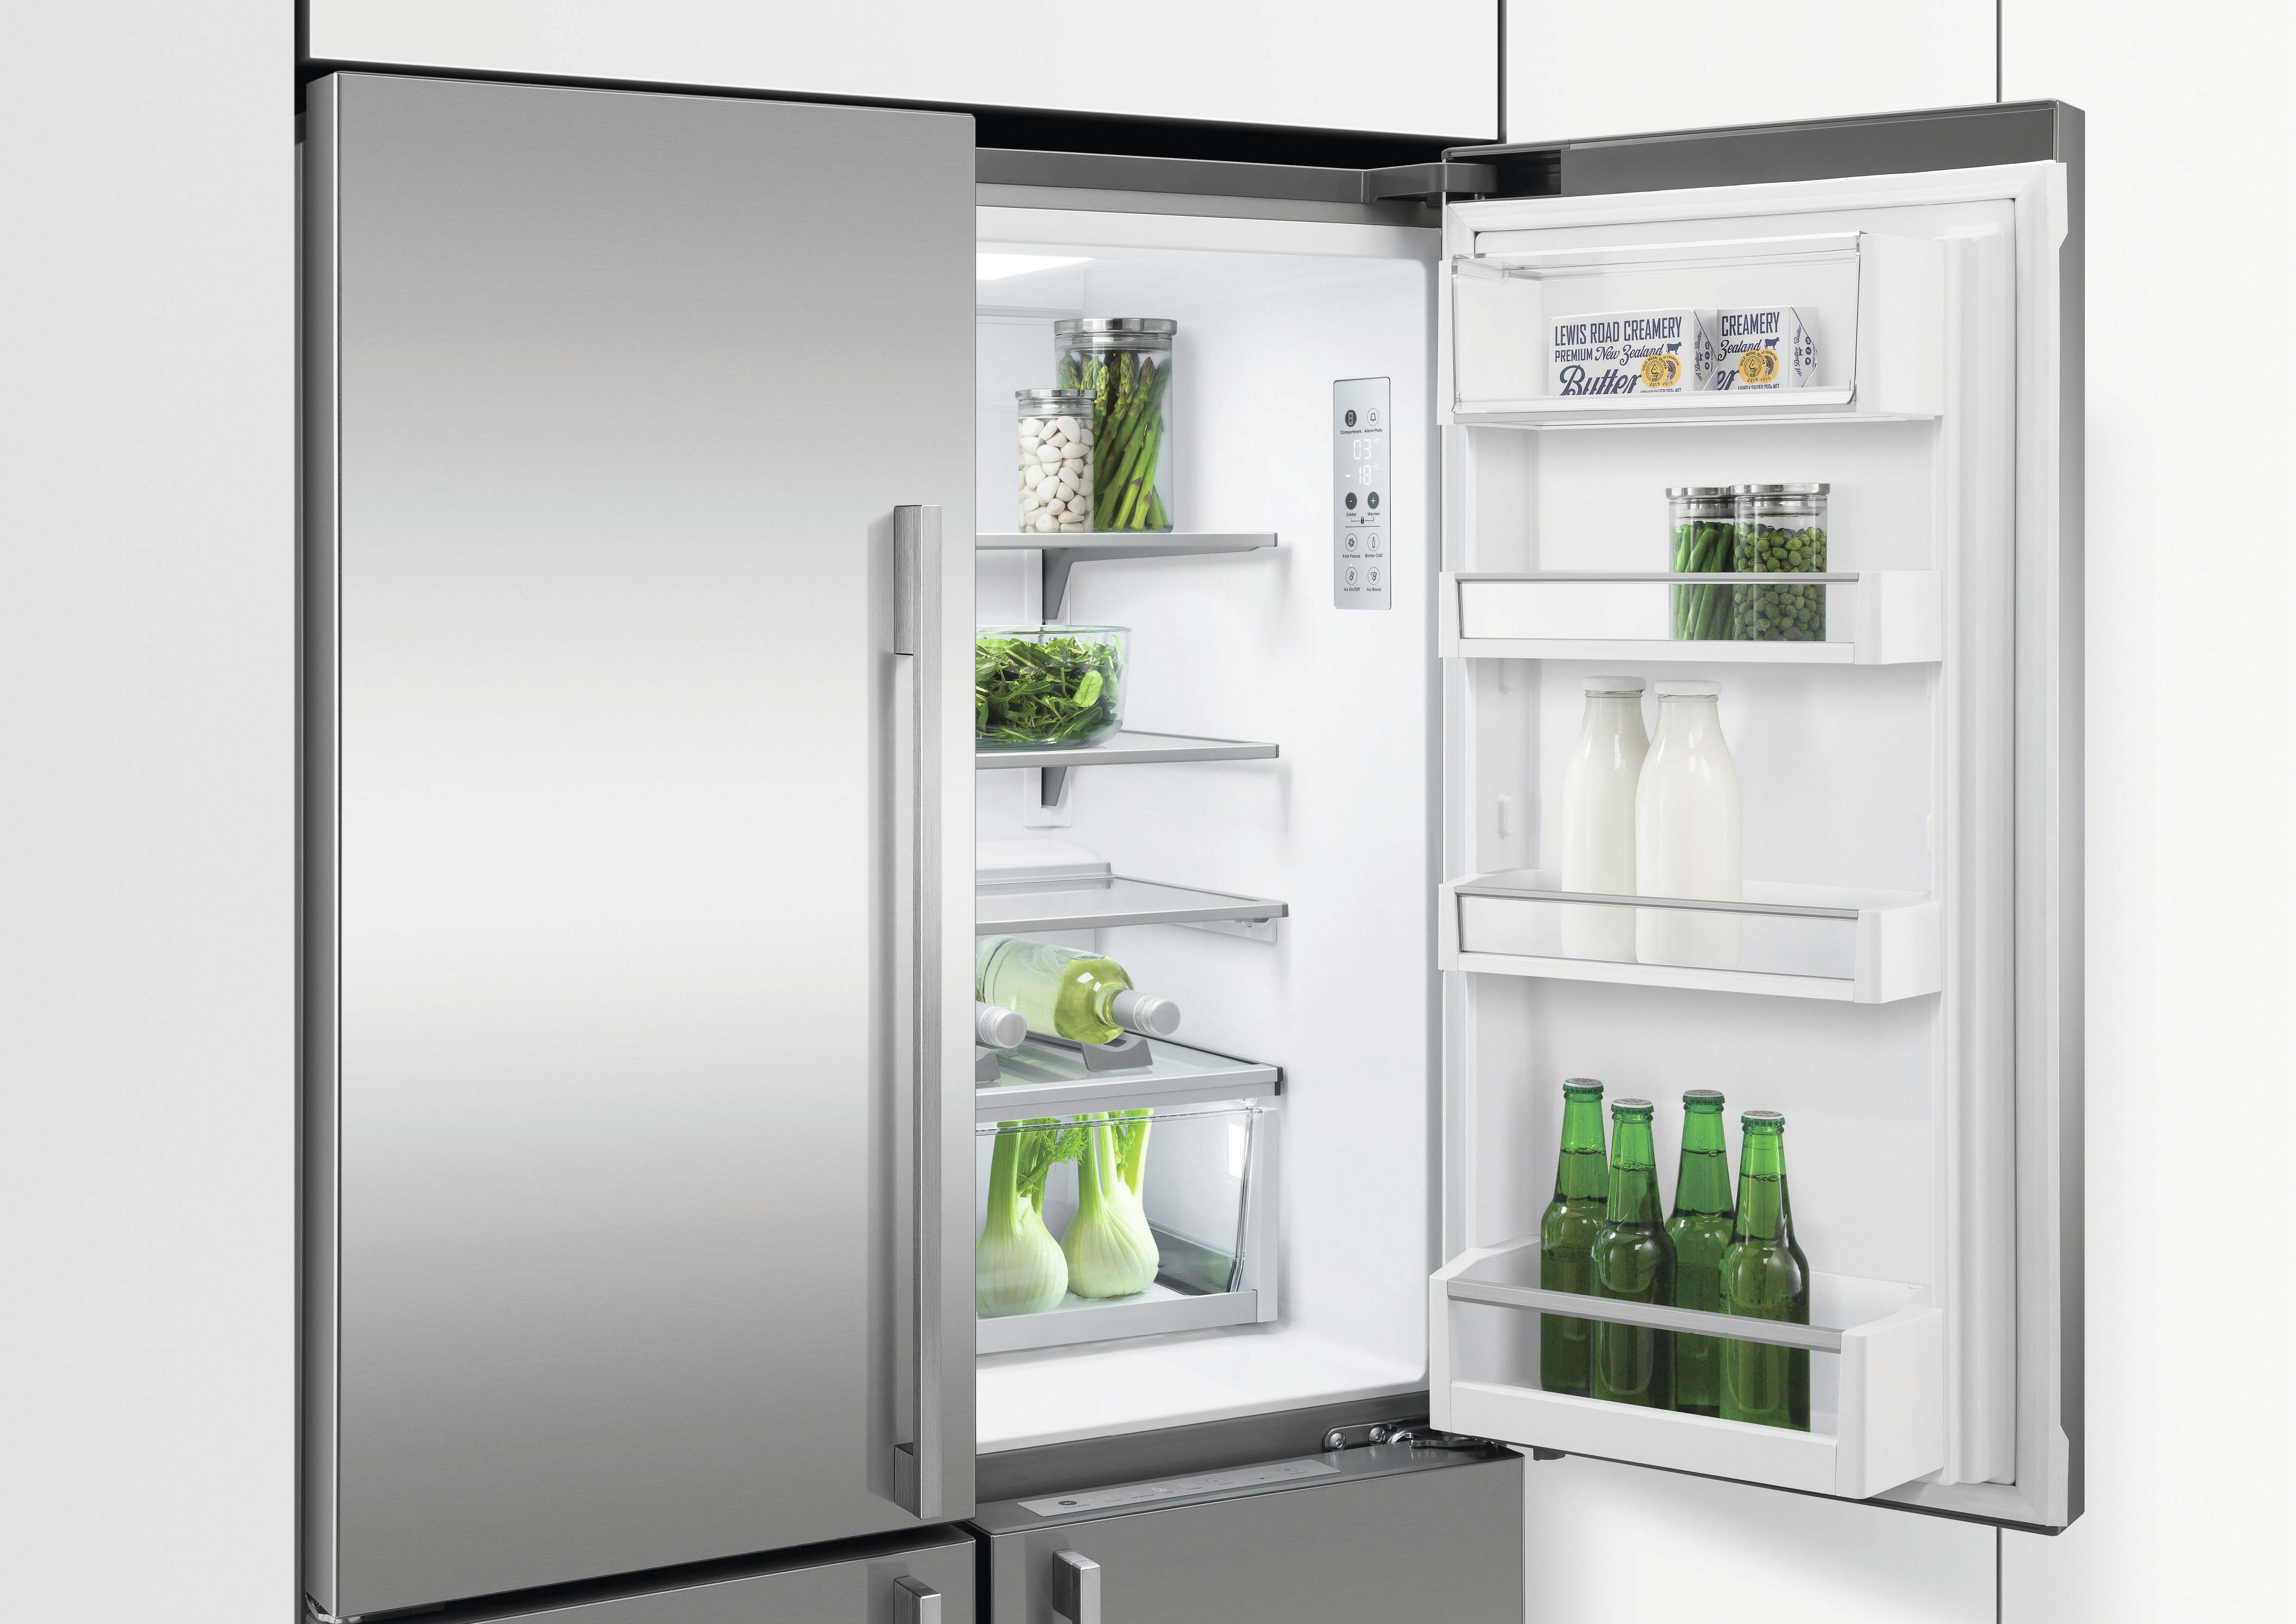 Easy DIY Refrigerator Cleaner